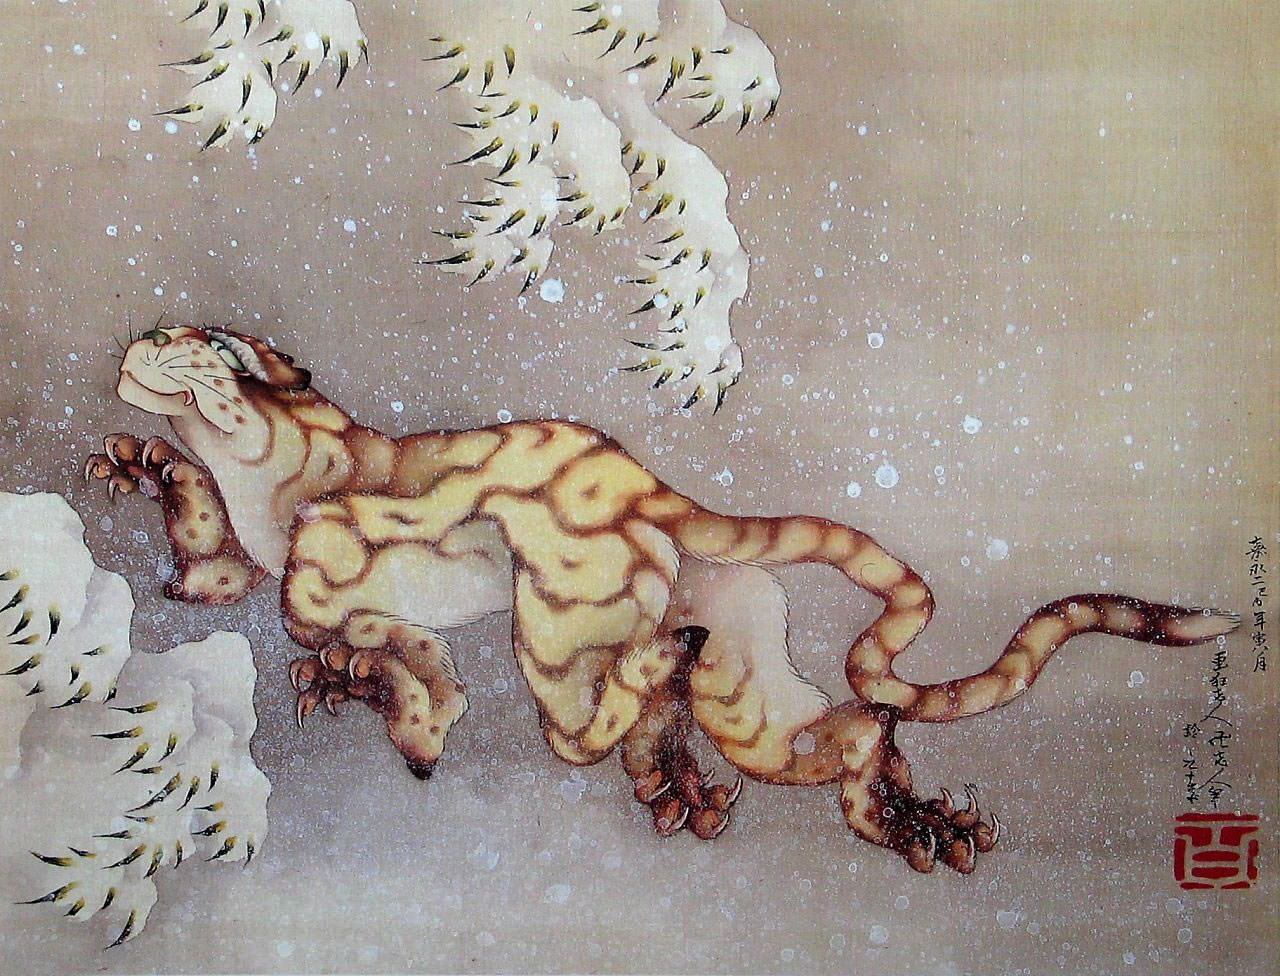 टाइगर इन द स्नो by Katsushika Hokusai - 1849 